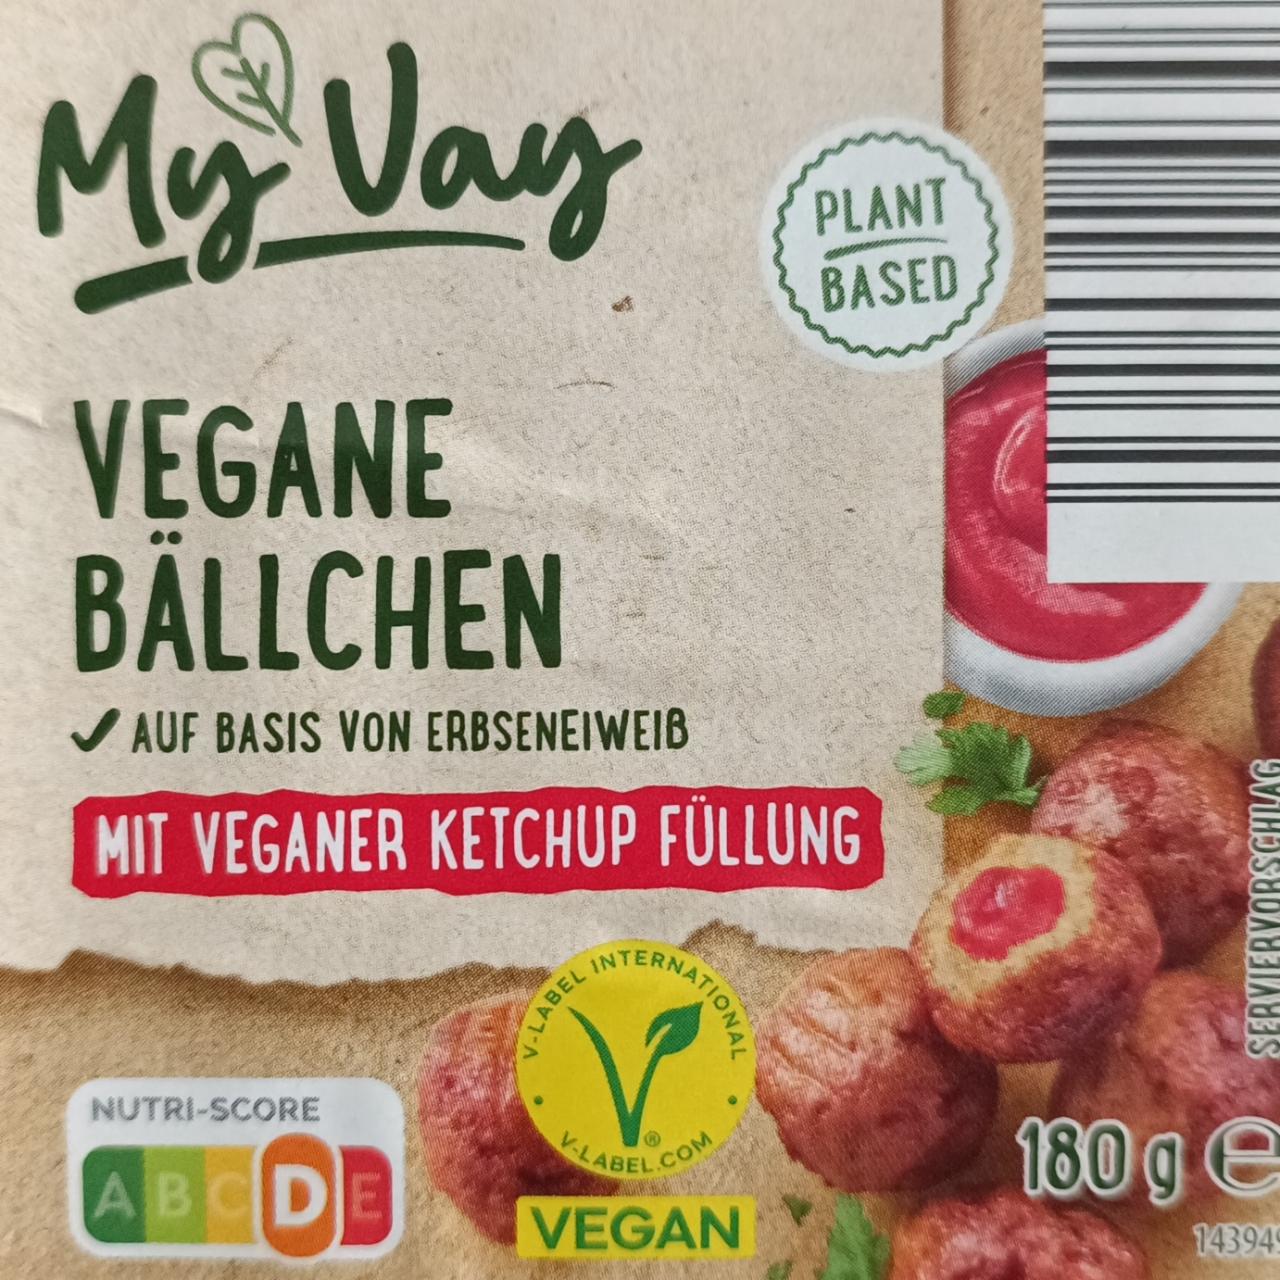 Fotografie - Vegane bällchen mit veganer ketchup füllung My Vay